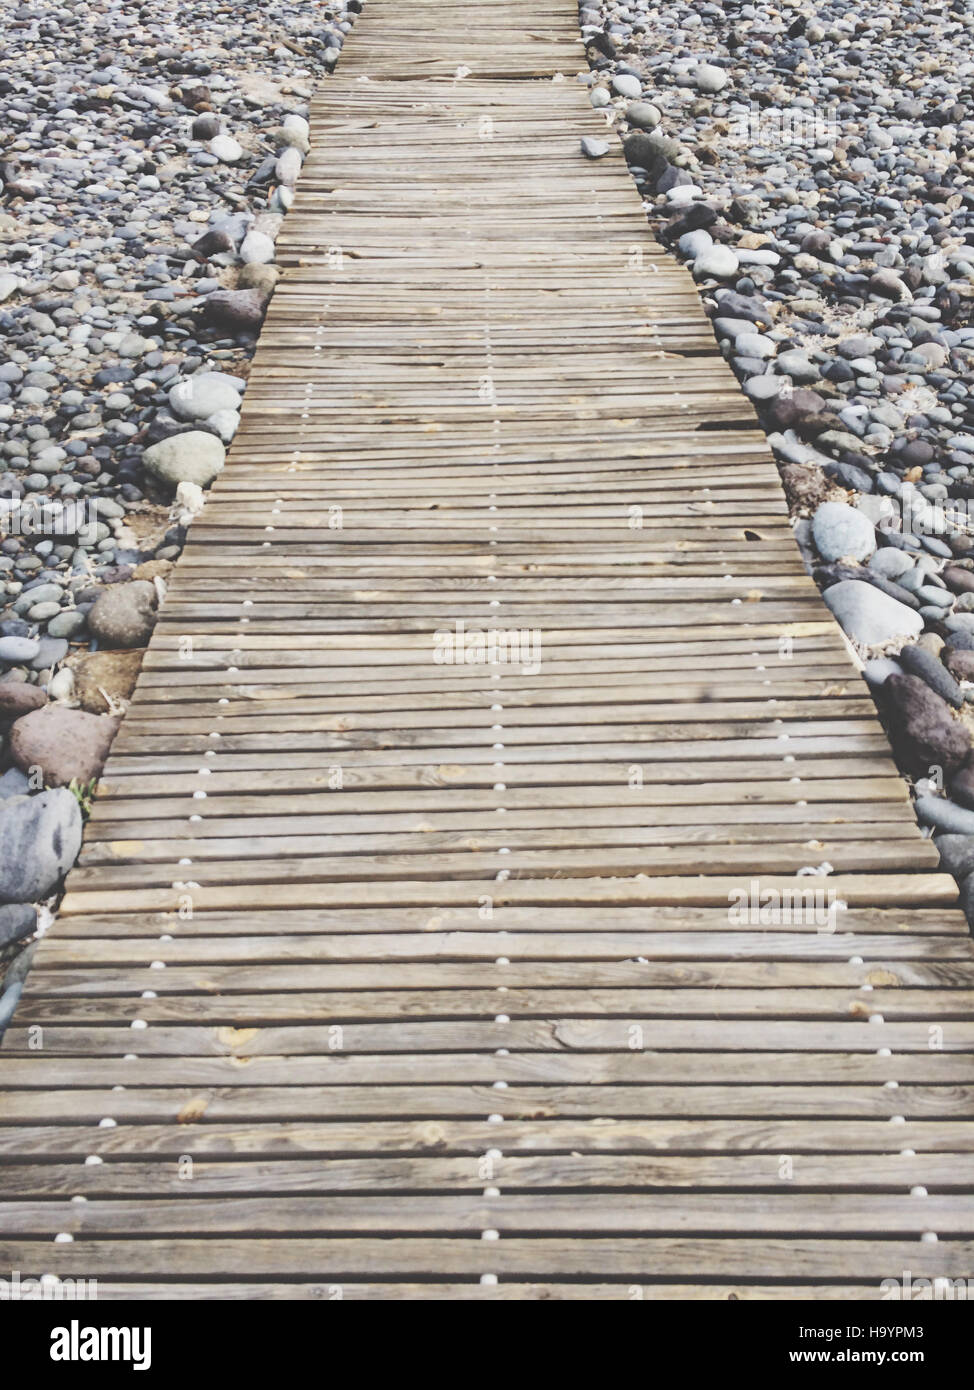 wooden pier on pebble stones Stock Photo